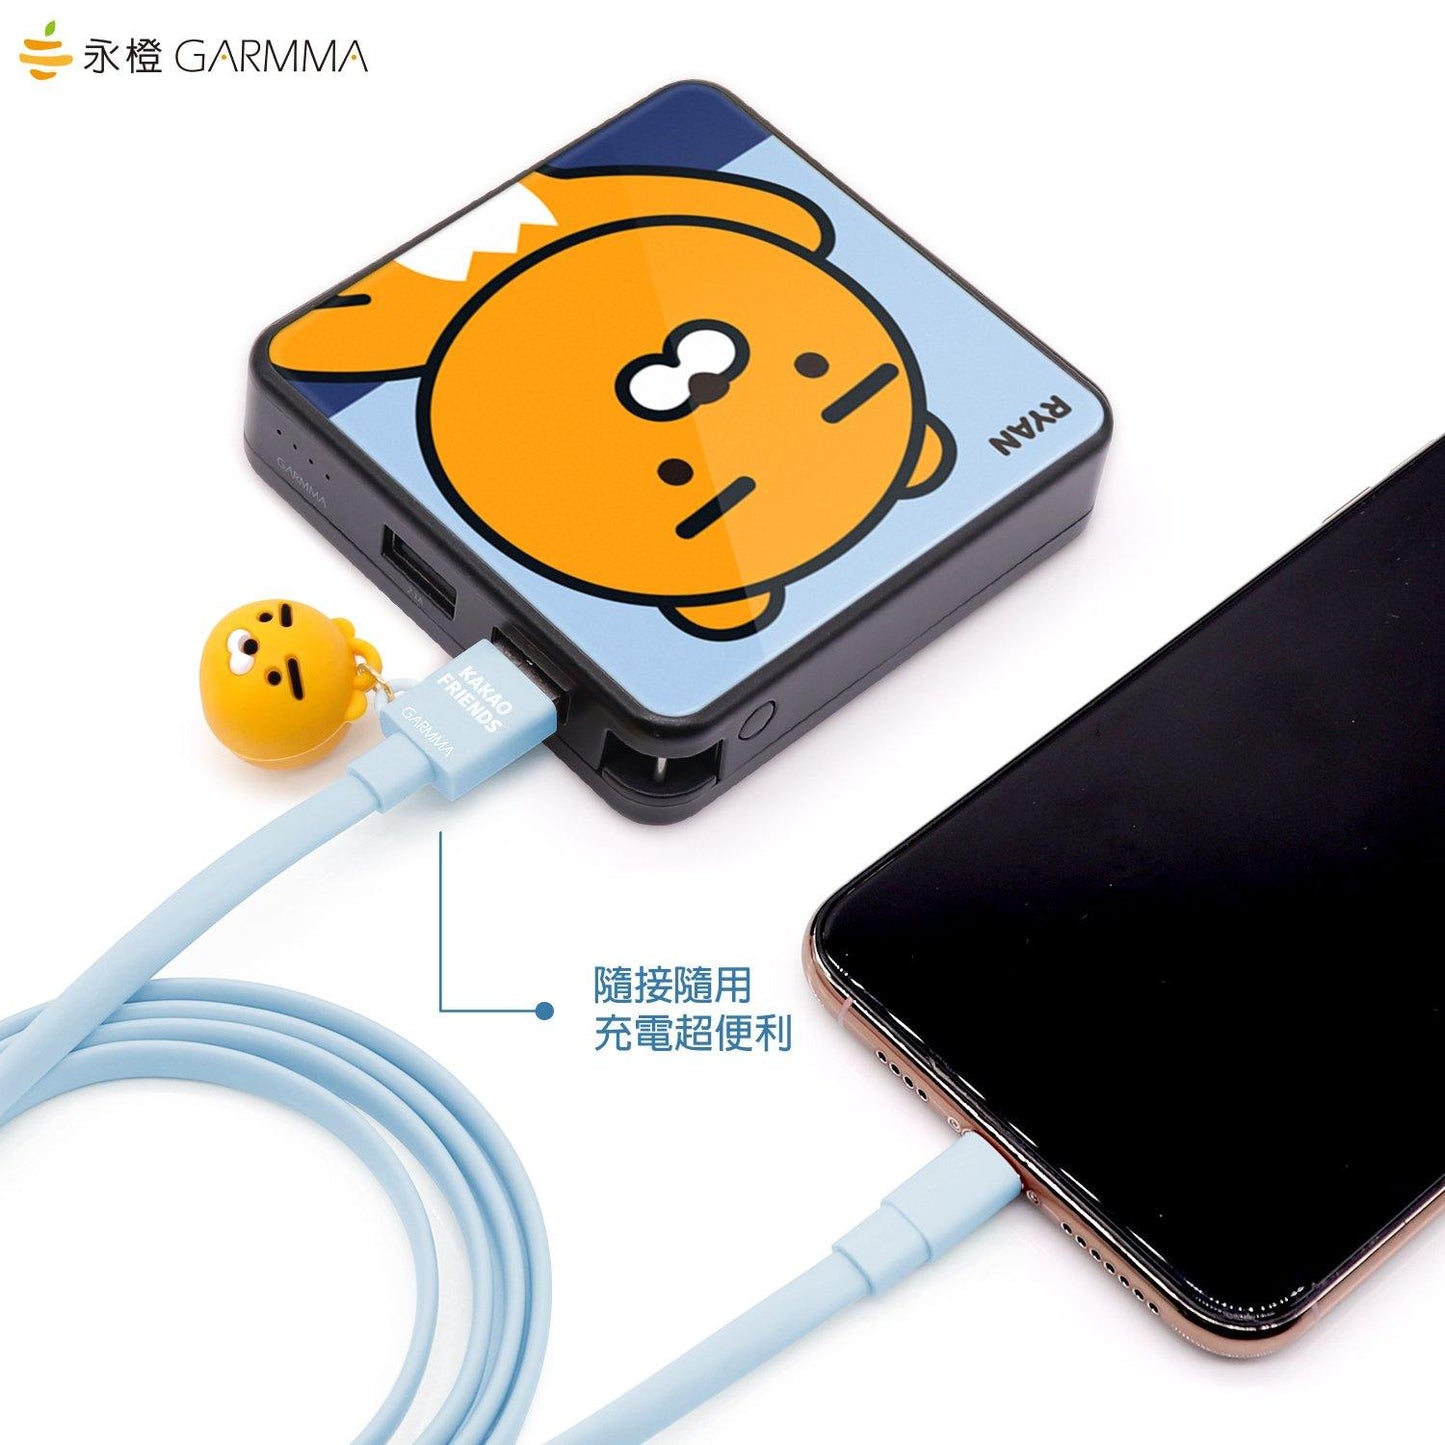 GARMMA Kakao Friends 1.2M Doll Dangler MFI Lightning Cable for Apple iPhone iPad iPod - Armor King Case